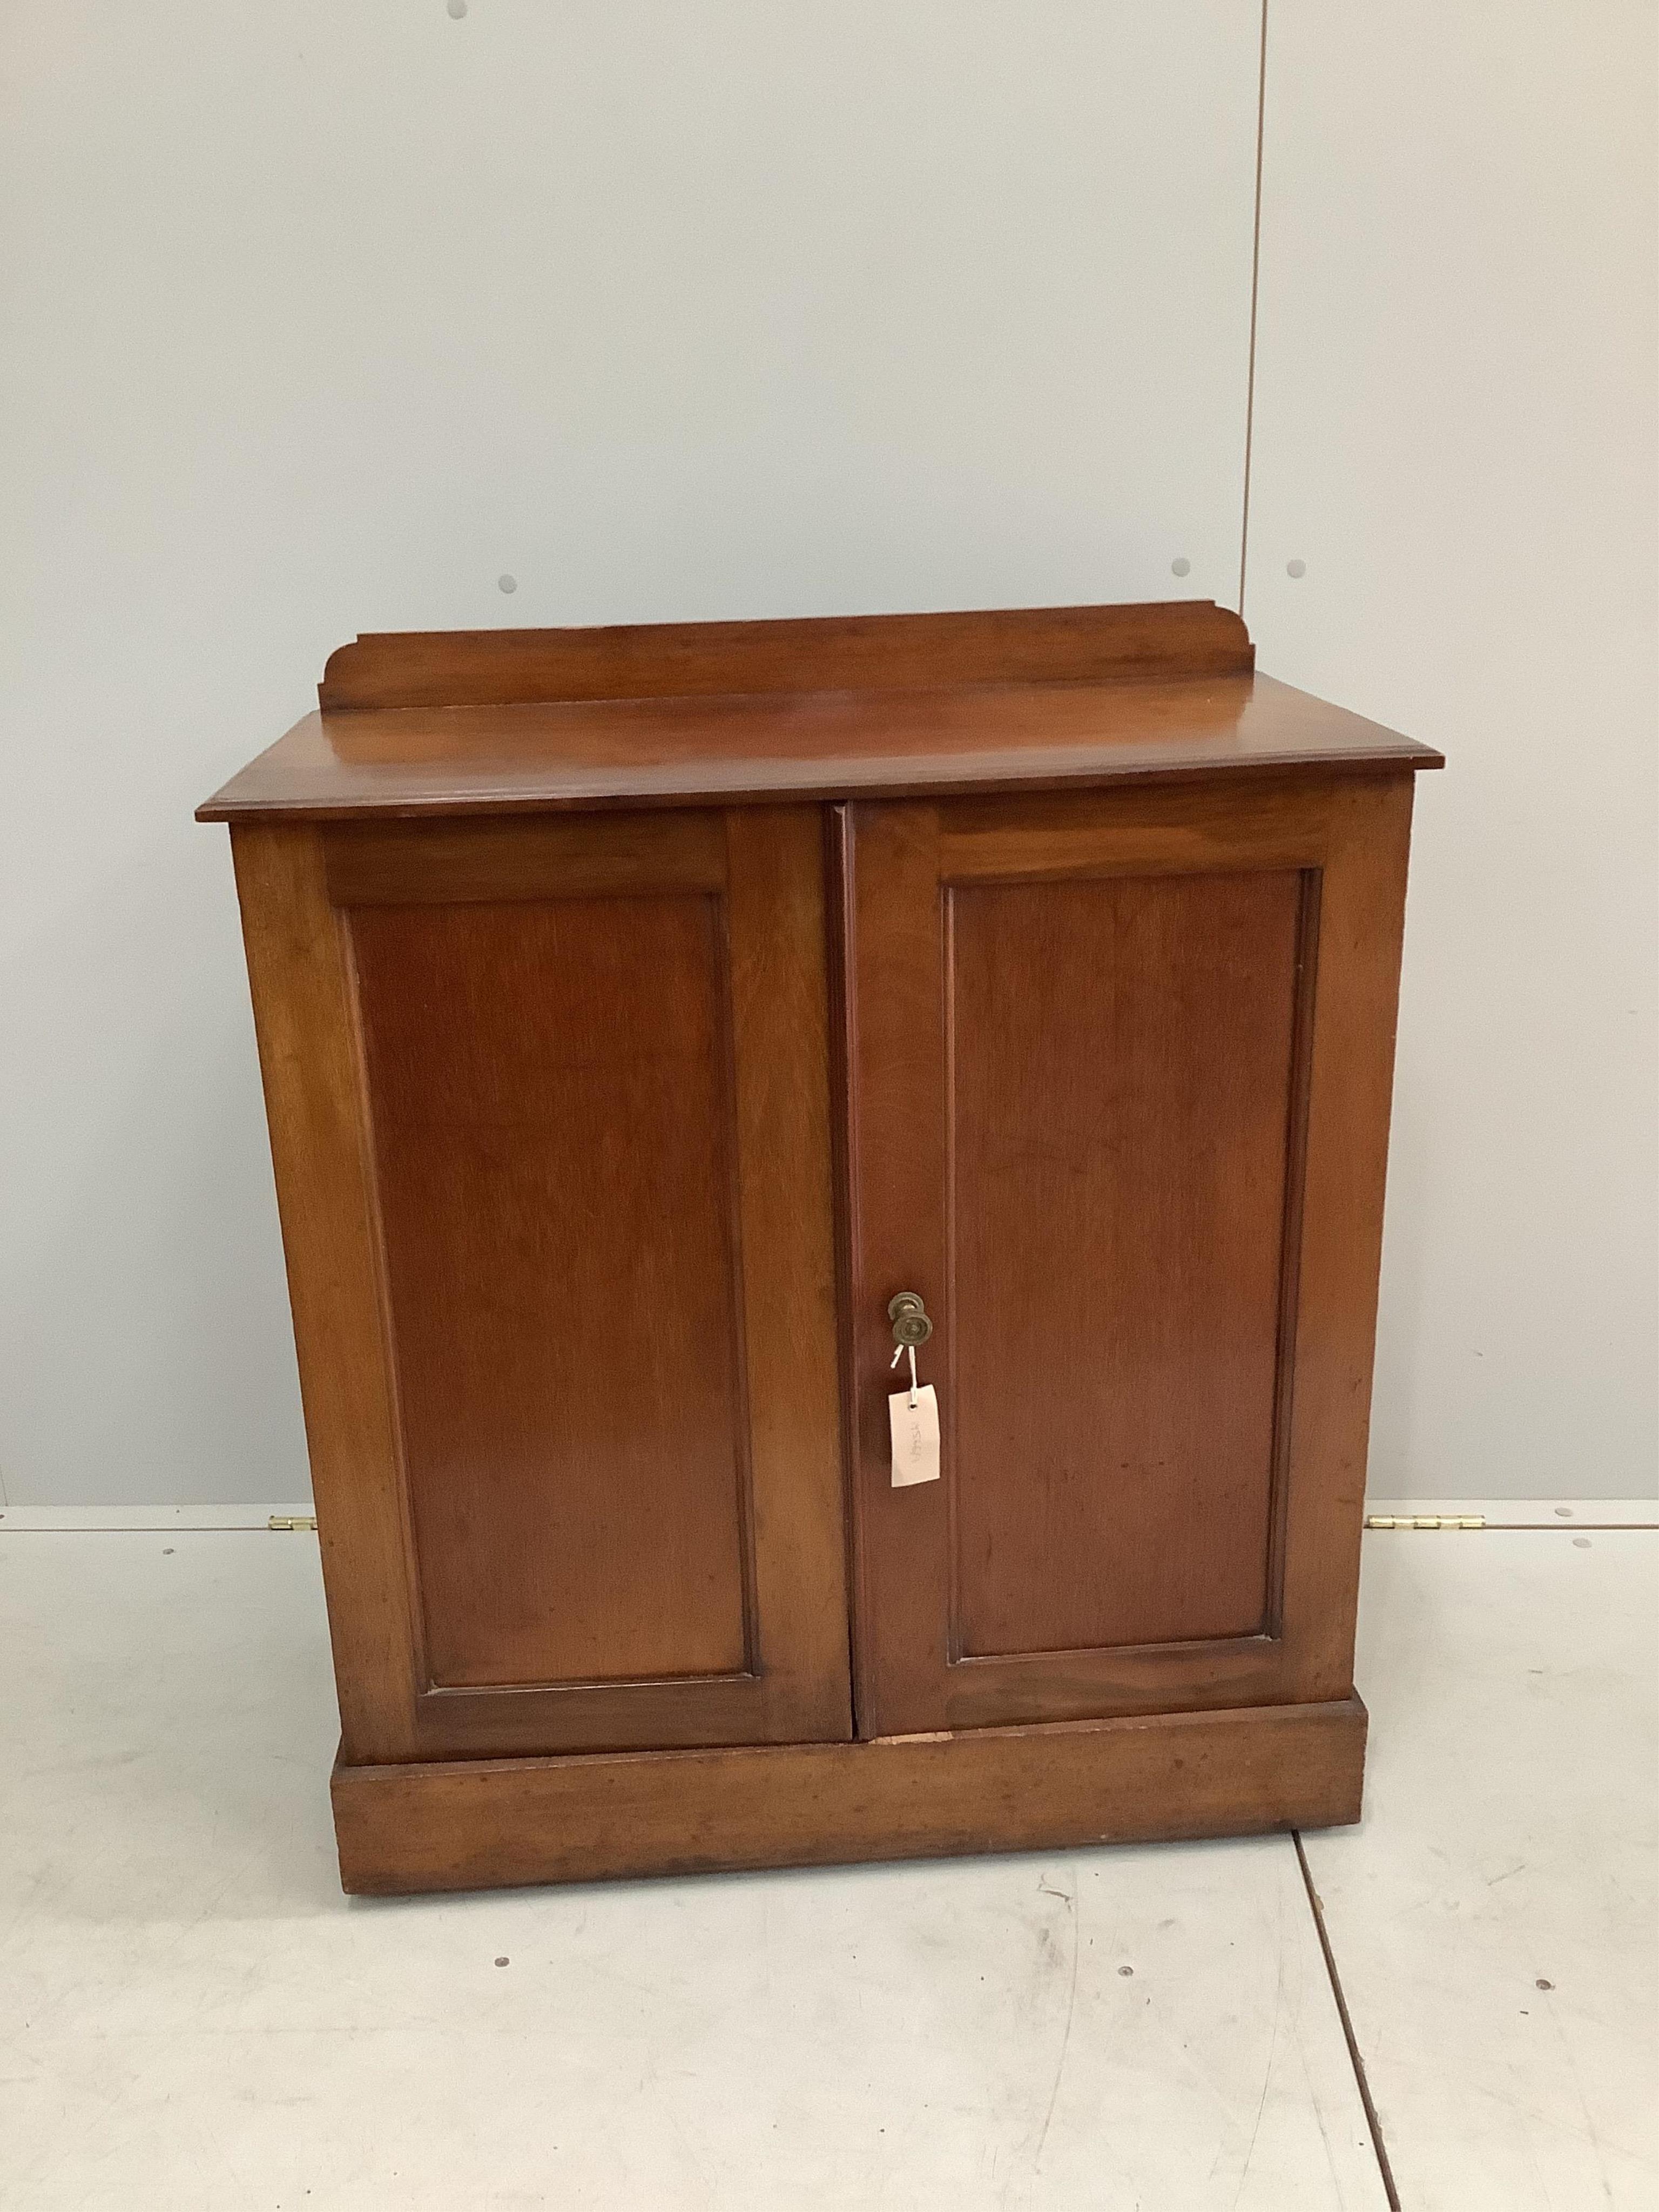 An Edwardian mahogany press cupboard, width 76cm, depth 40cm, height 88cm. Condition - fair